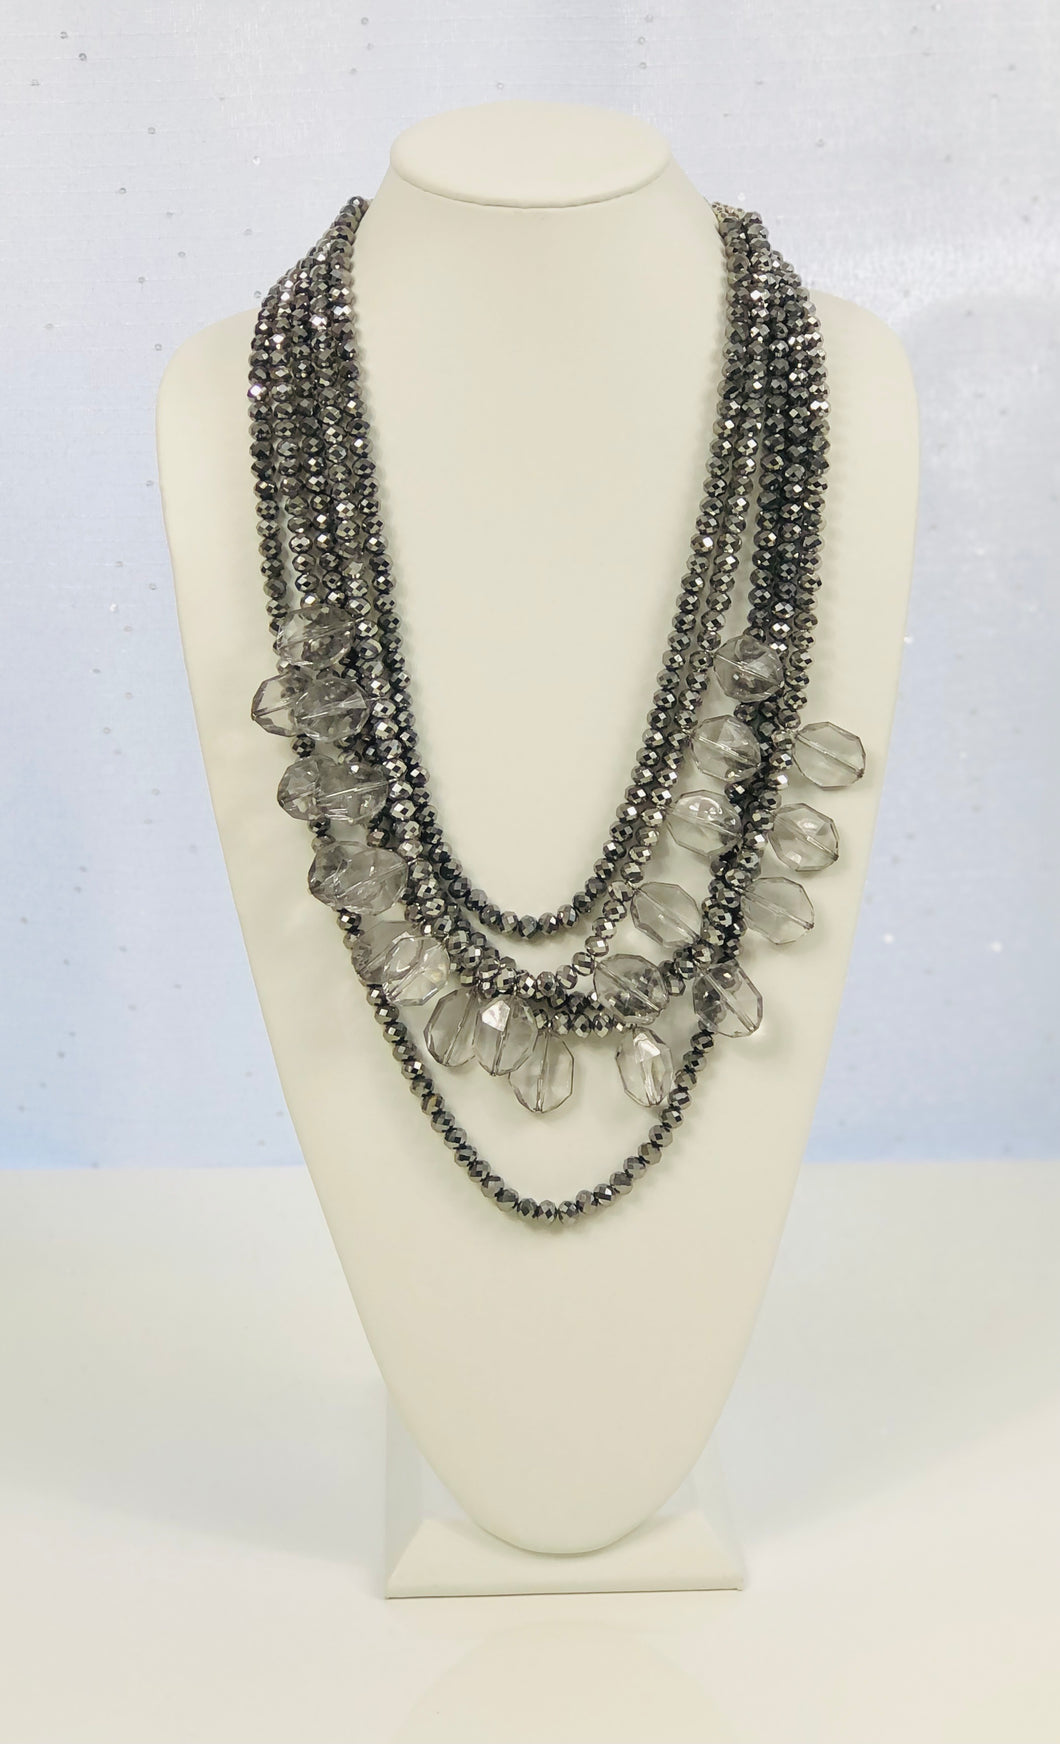 Kensington Glass Beads Necklace - Silver